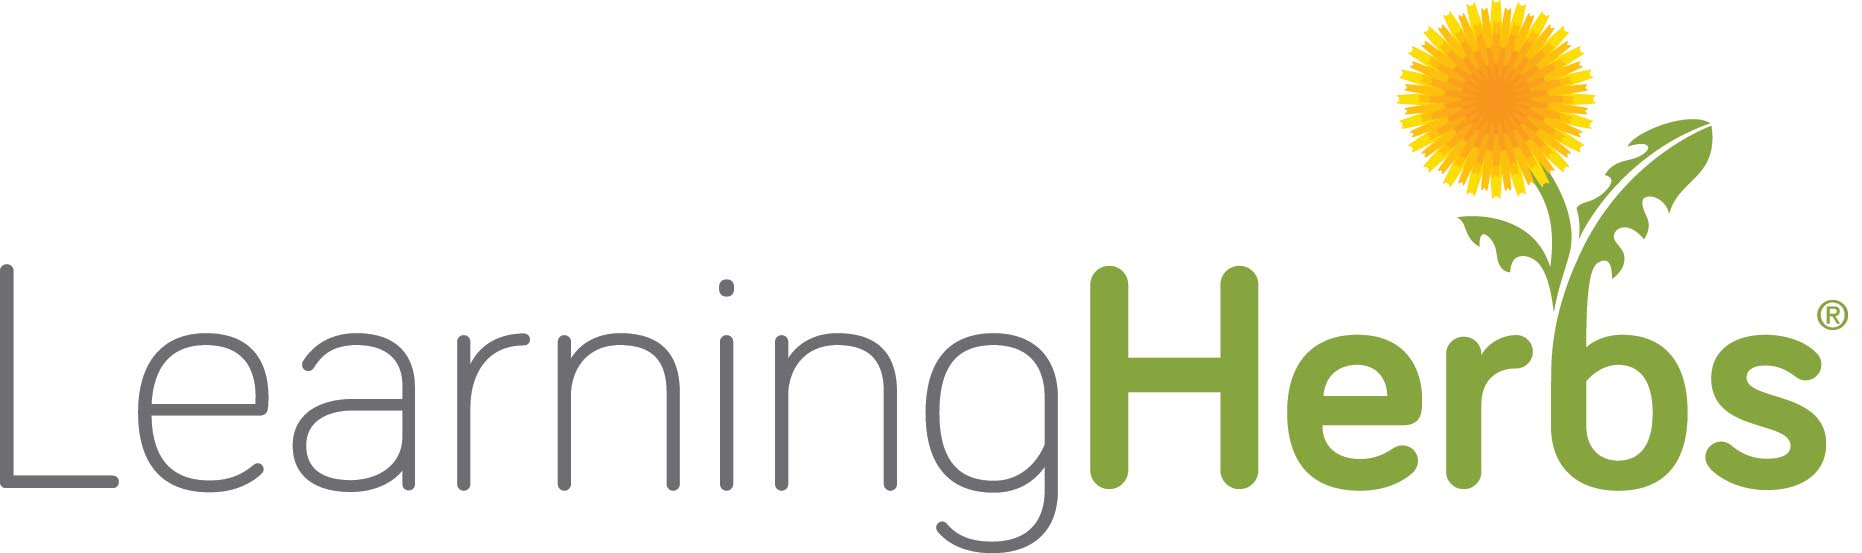 LearningHerbs high resolution logo